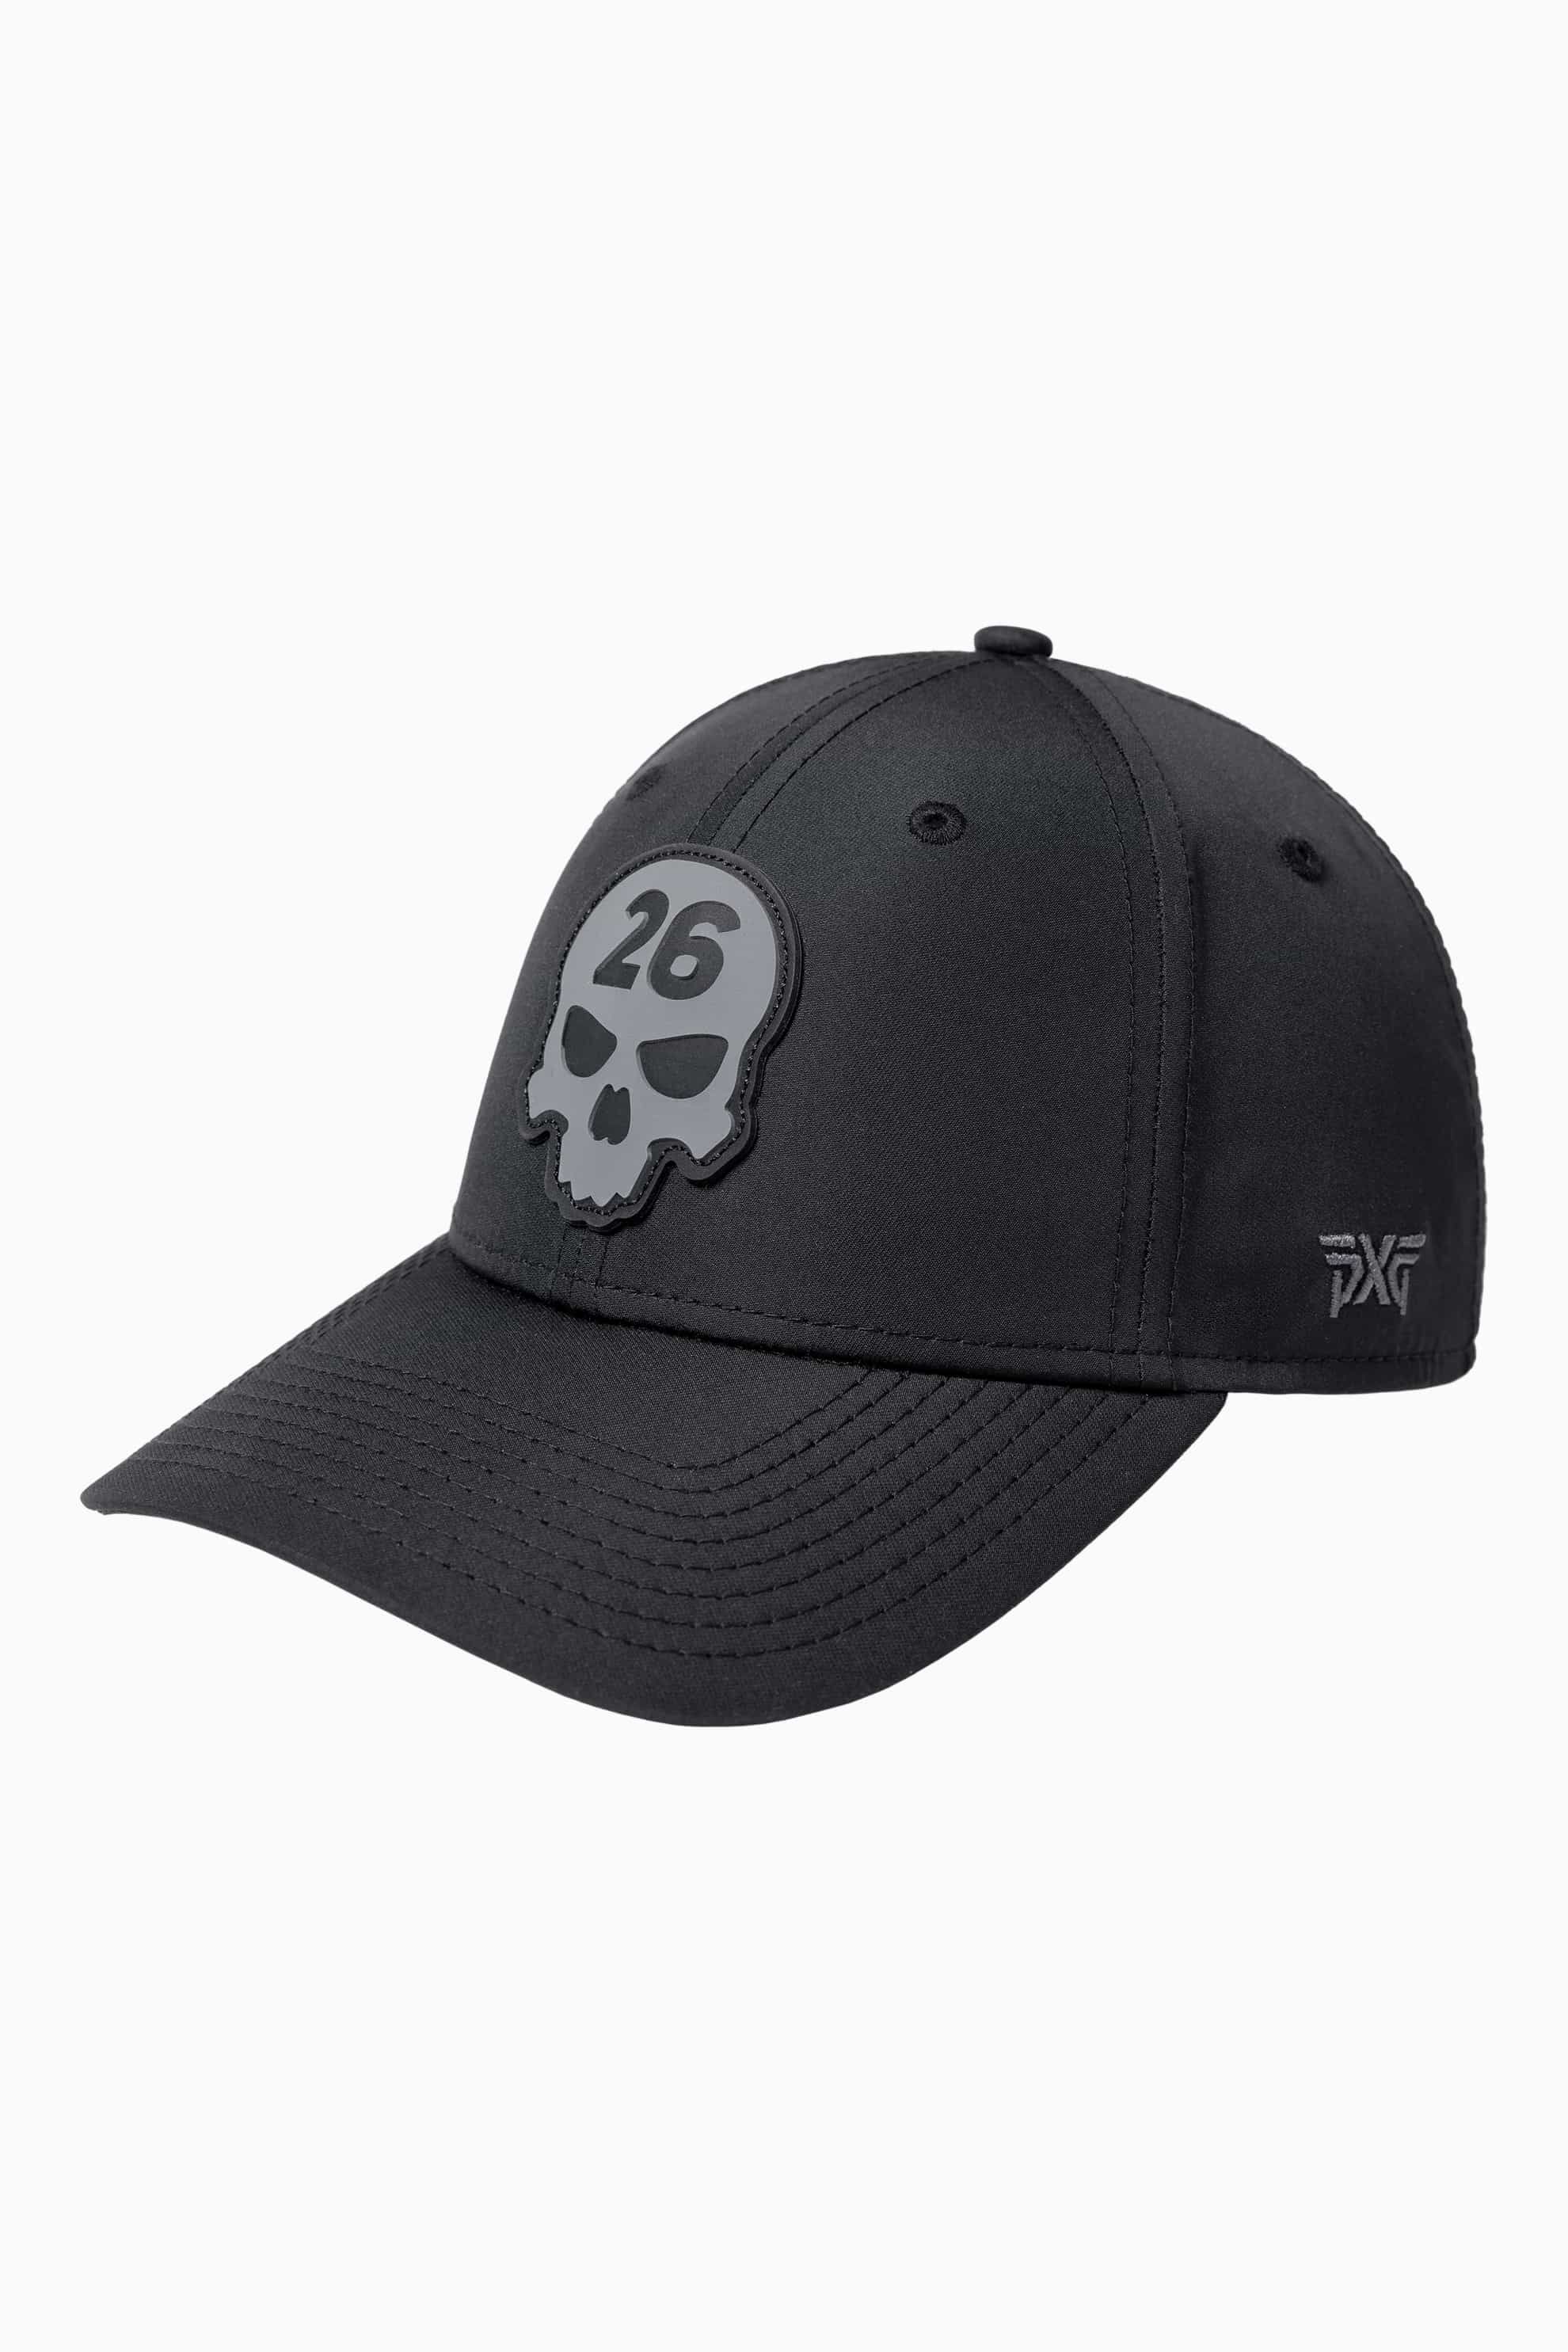 Buy Darkness Black Label Elite 9Forty Snapback Cap | PXG